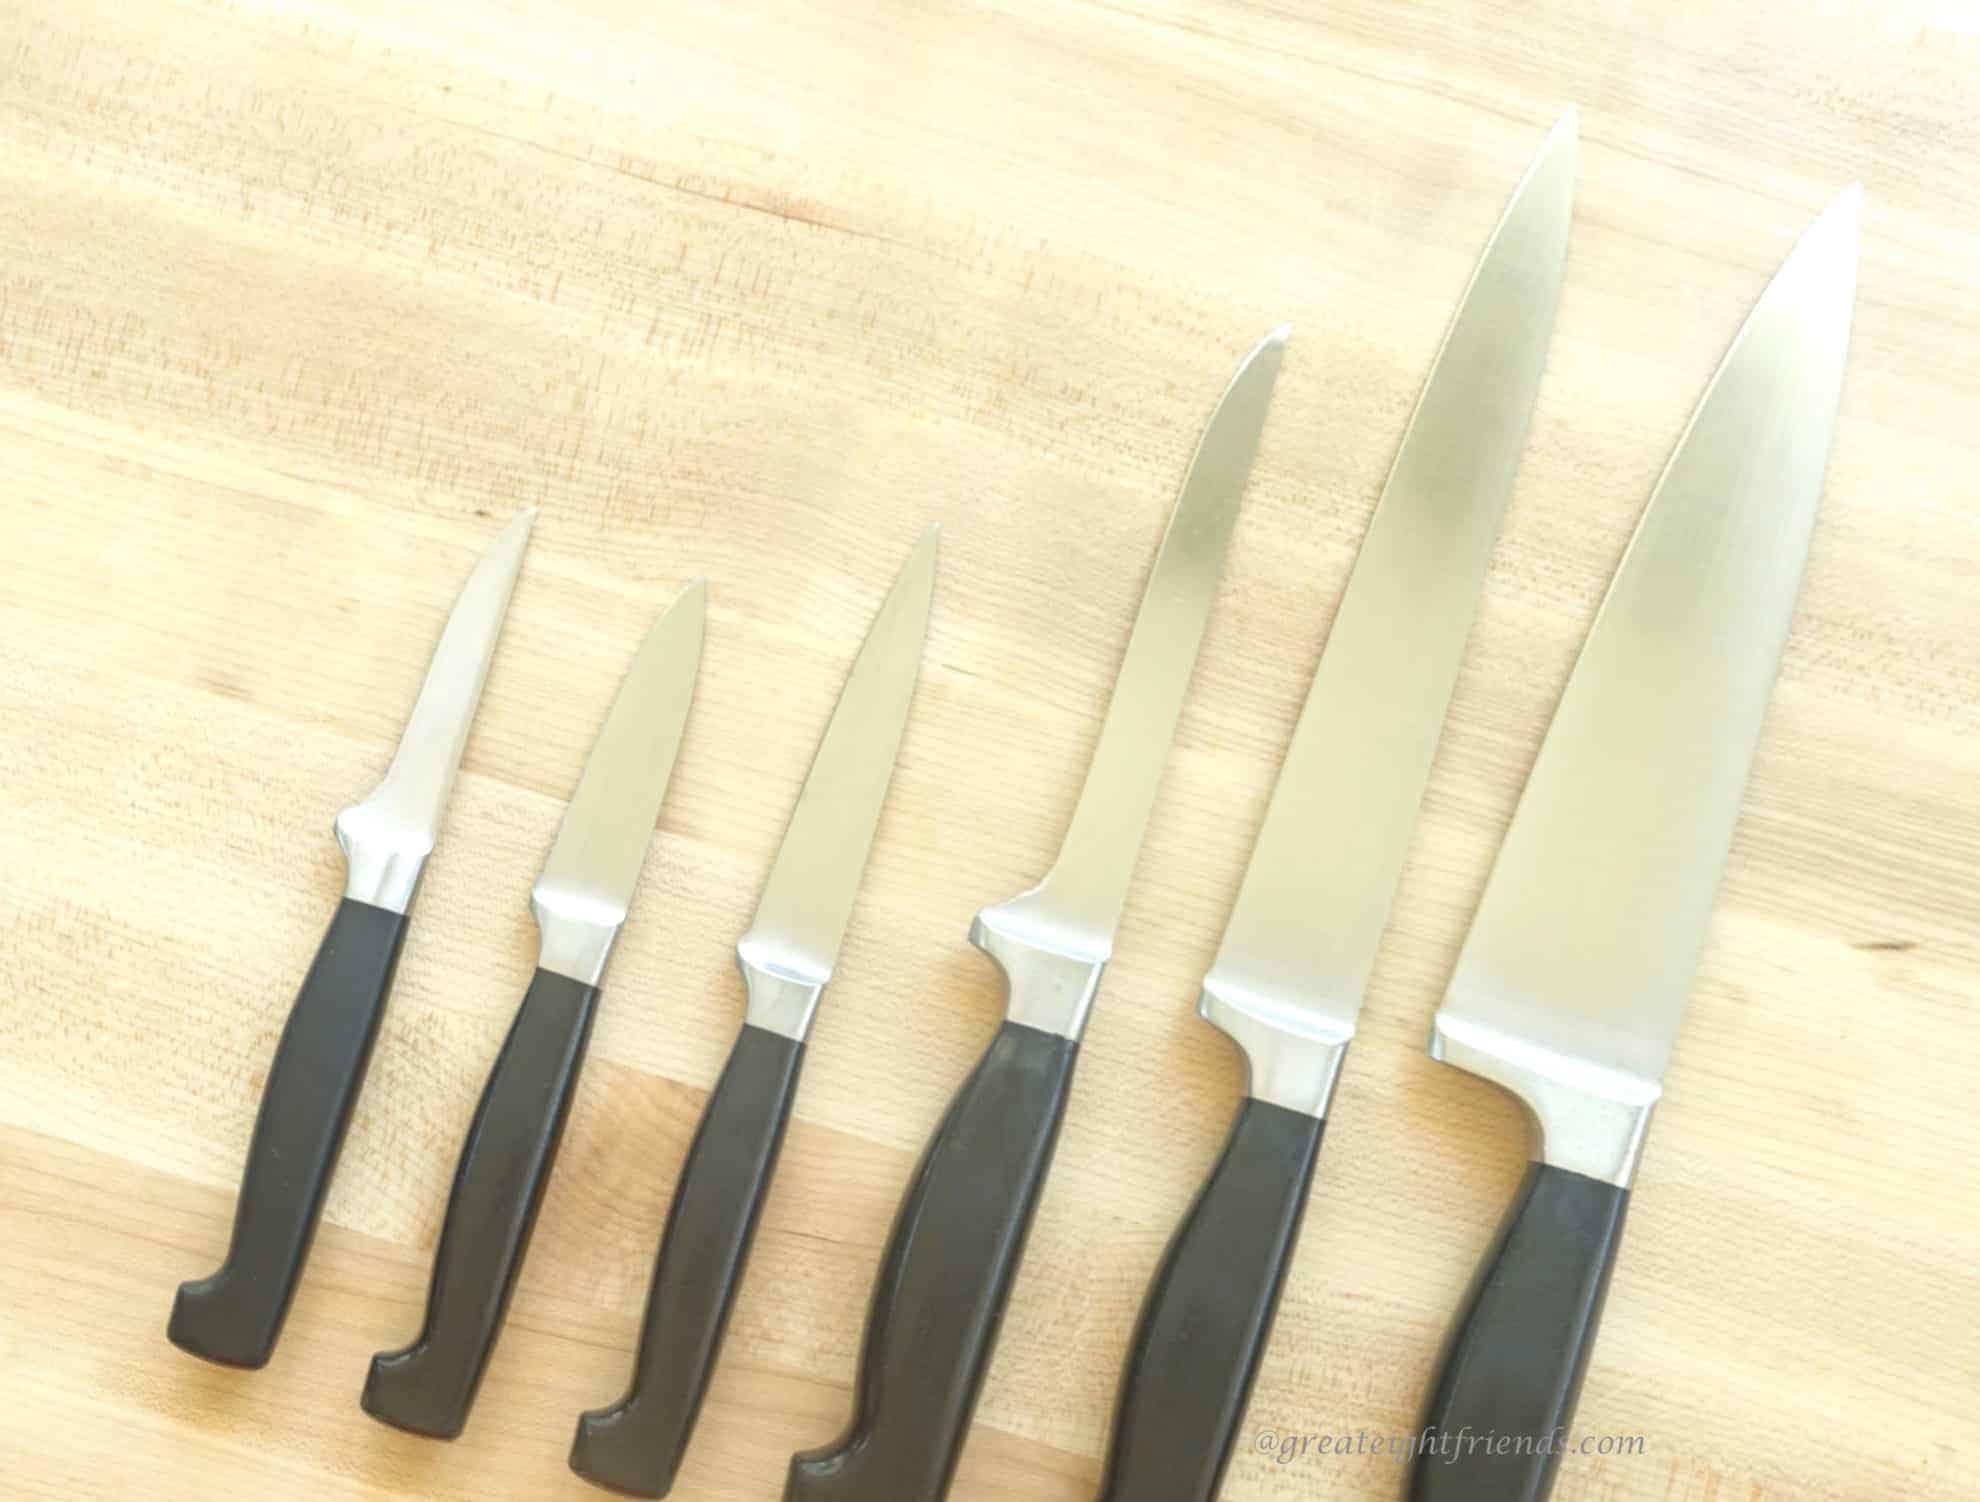 A set of 6 knives.